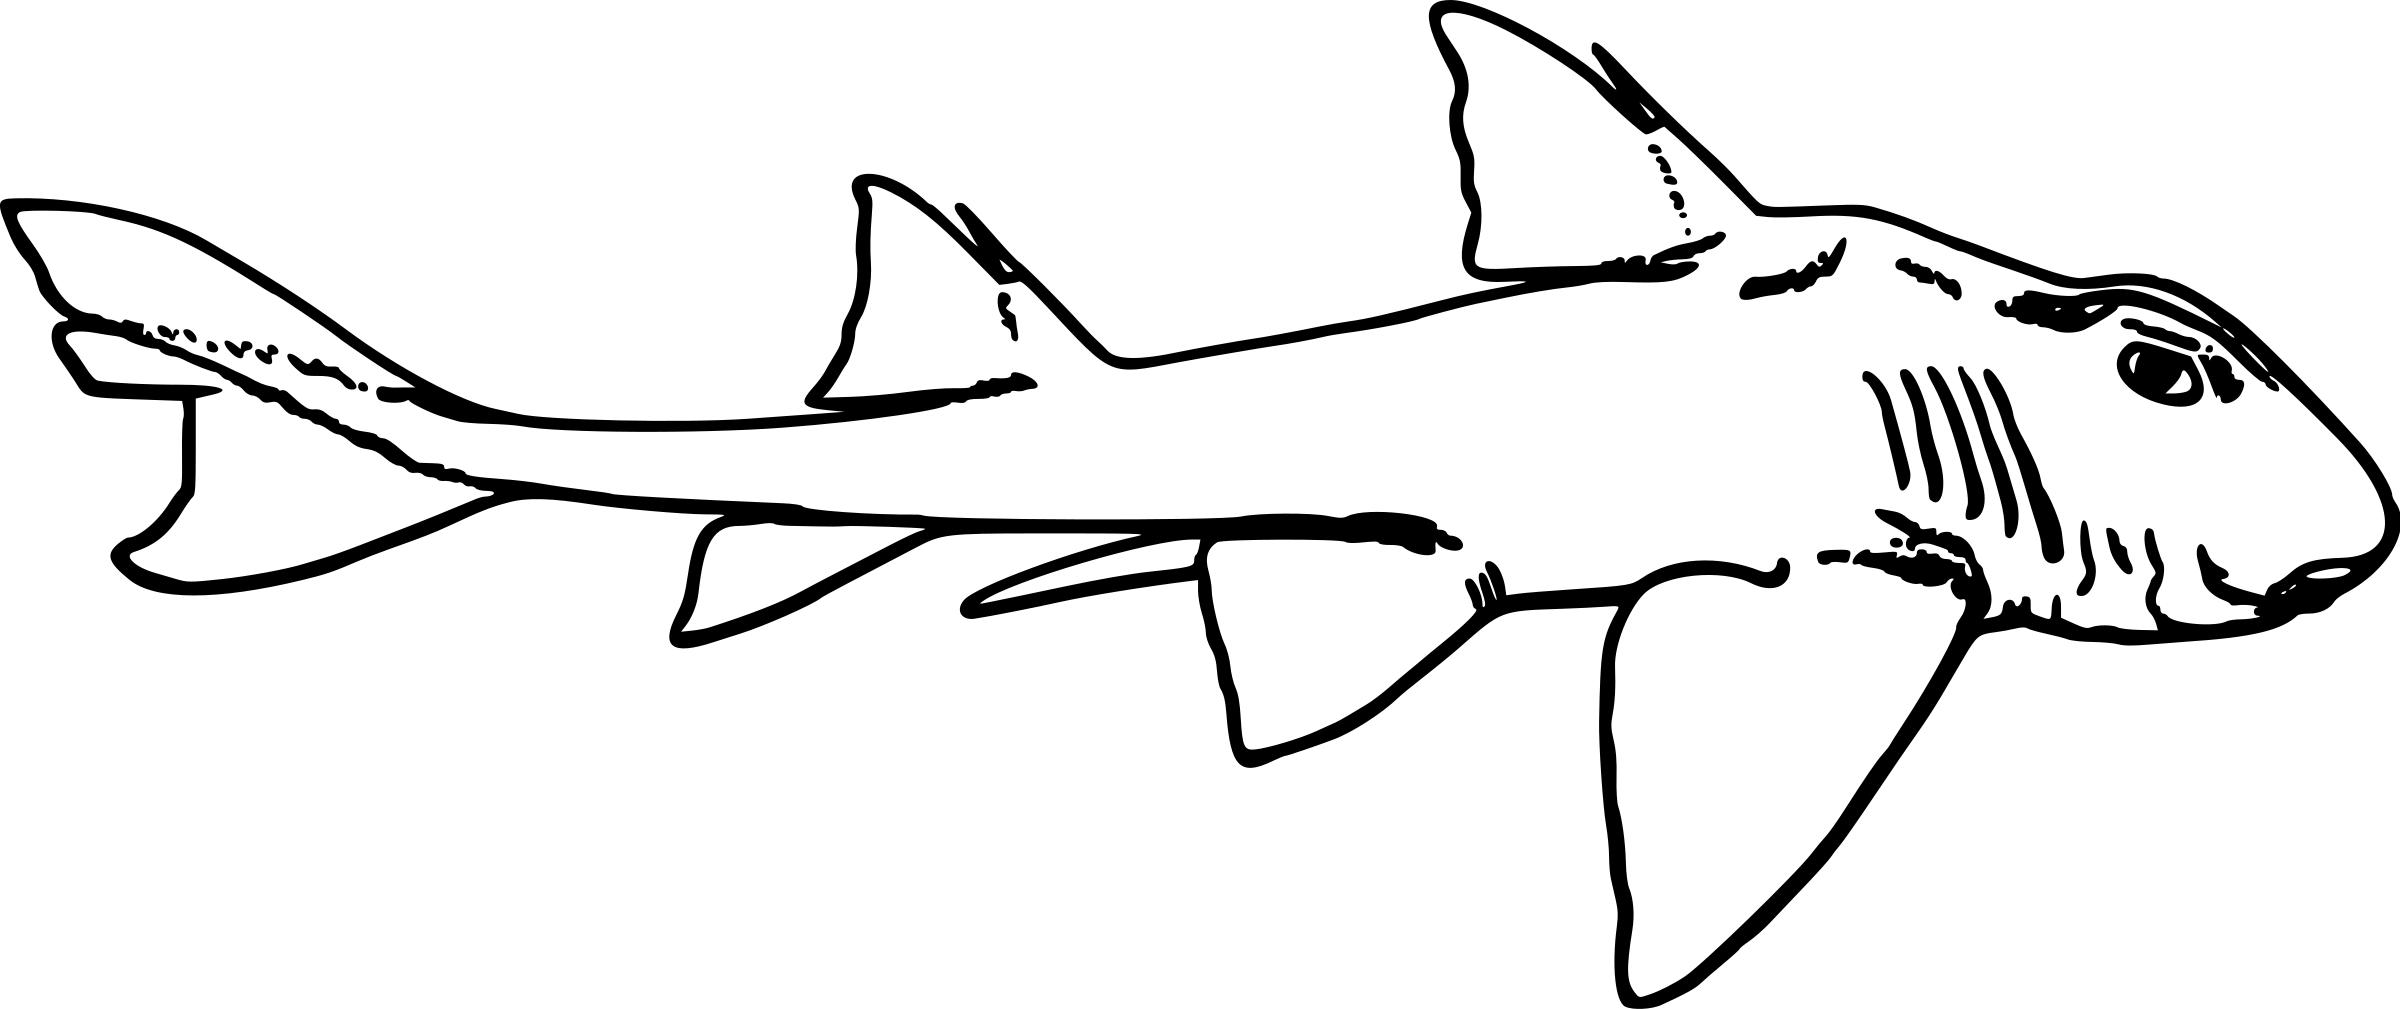 Port jackson shark icons